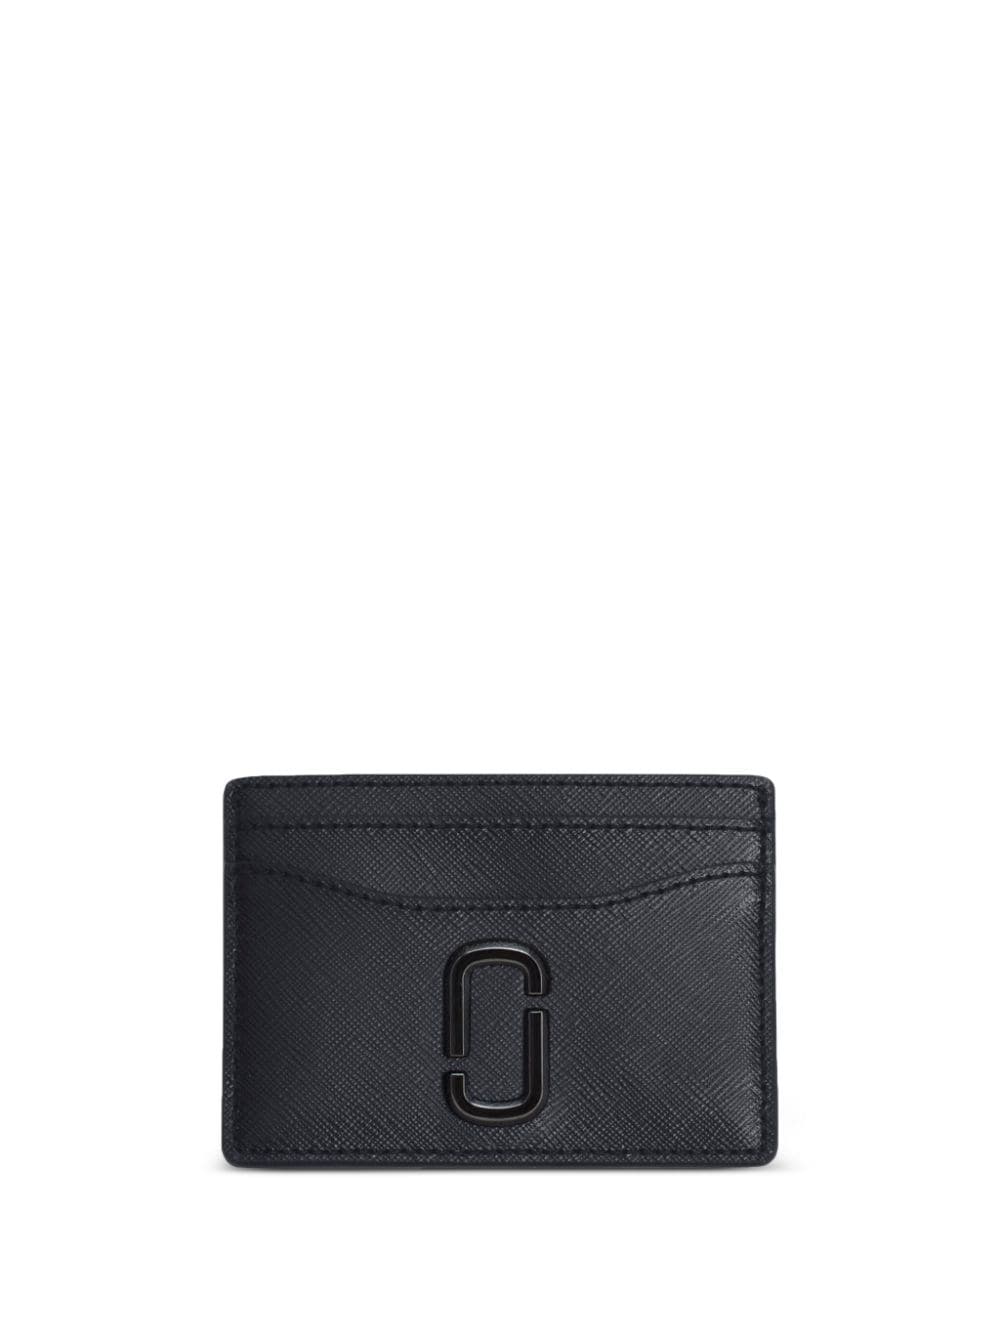 Marc Jacobs The Card Case' leather cardholder - Black von Marc Jacobs